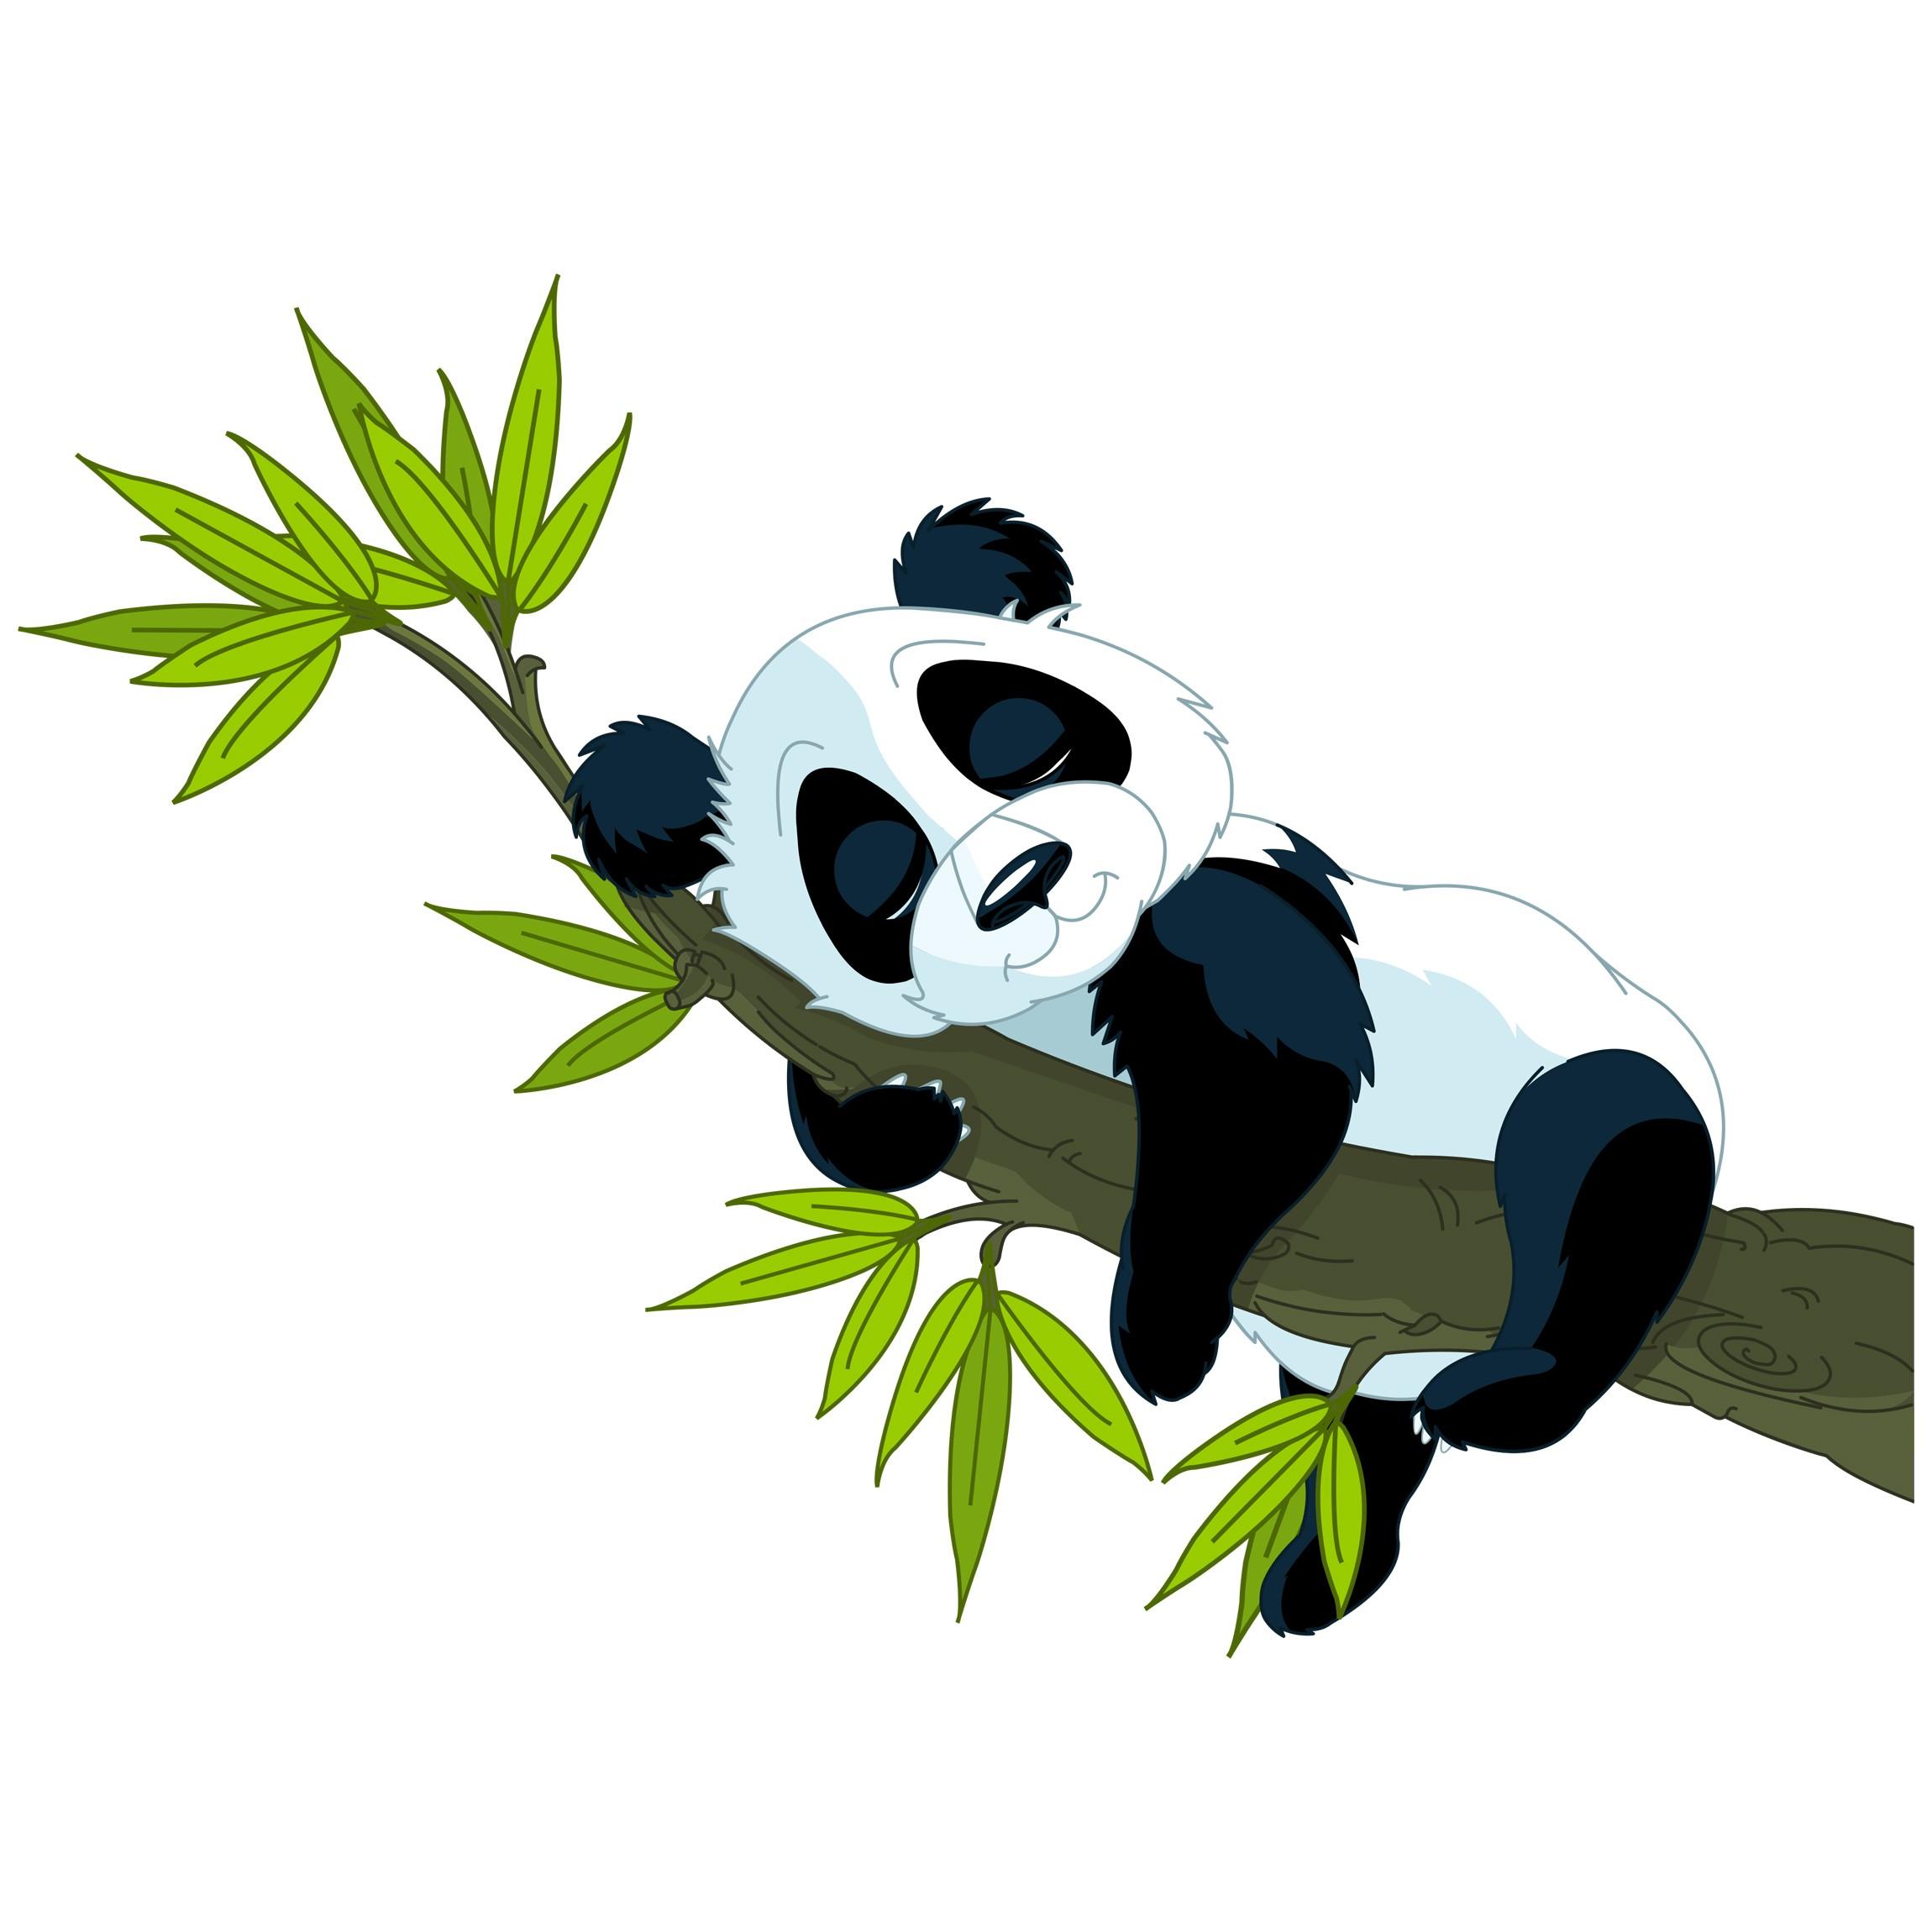 Samolepka na stenu spiaca Panda